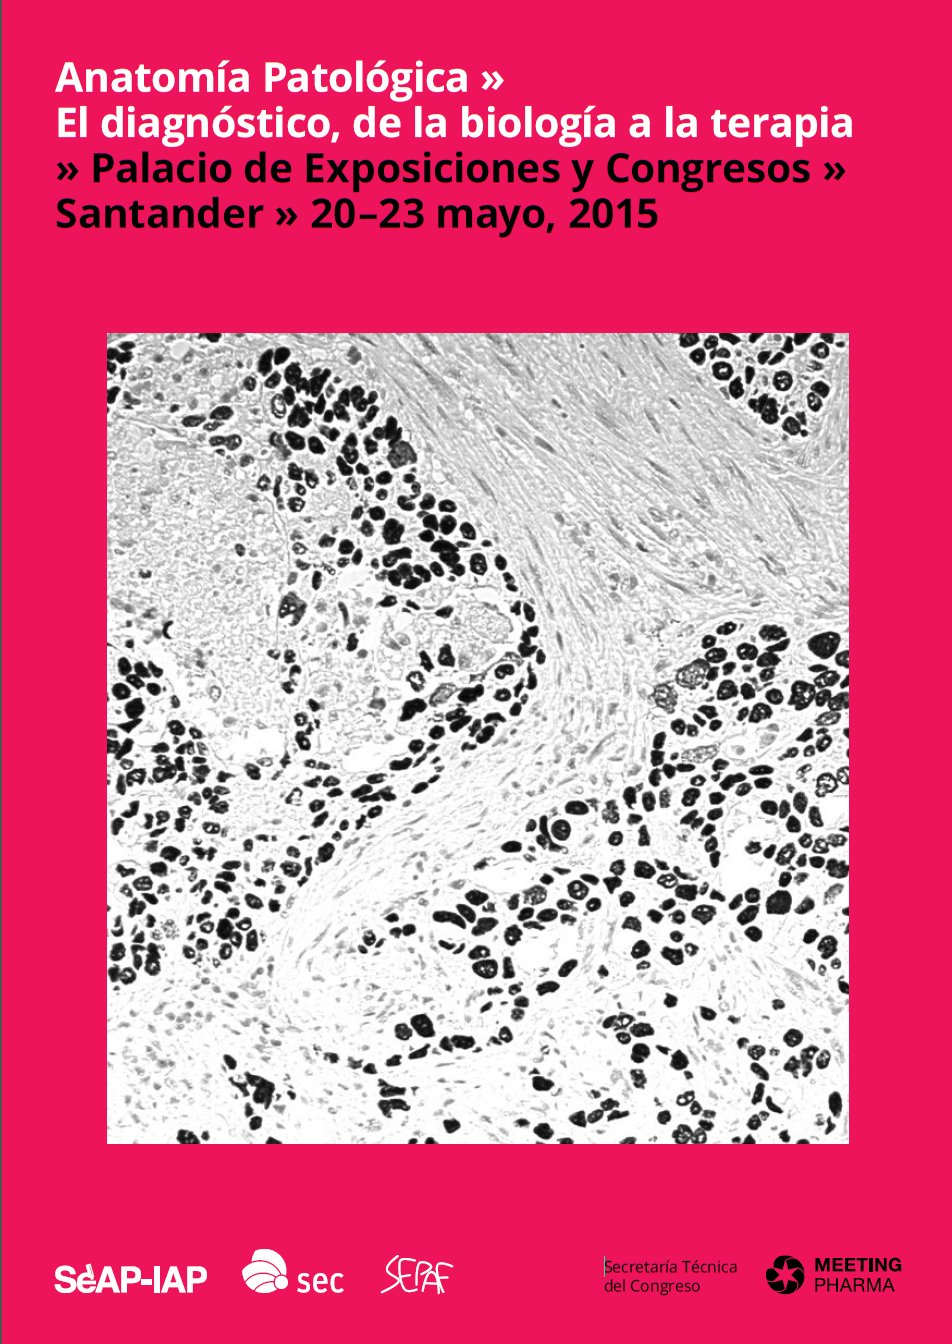 2015 Santander